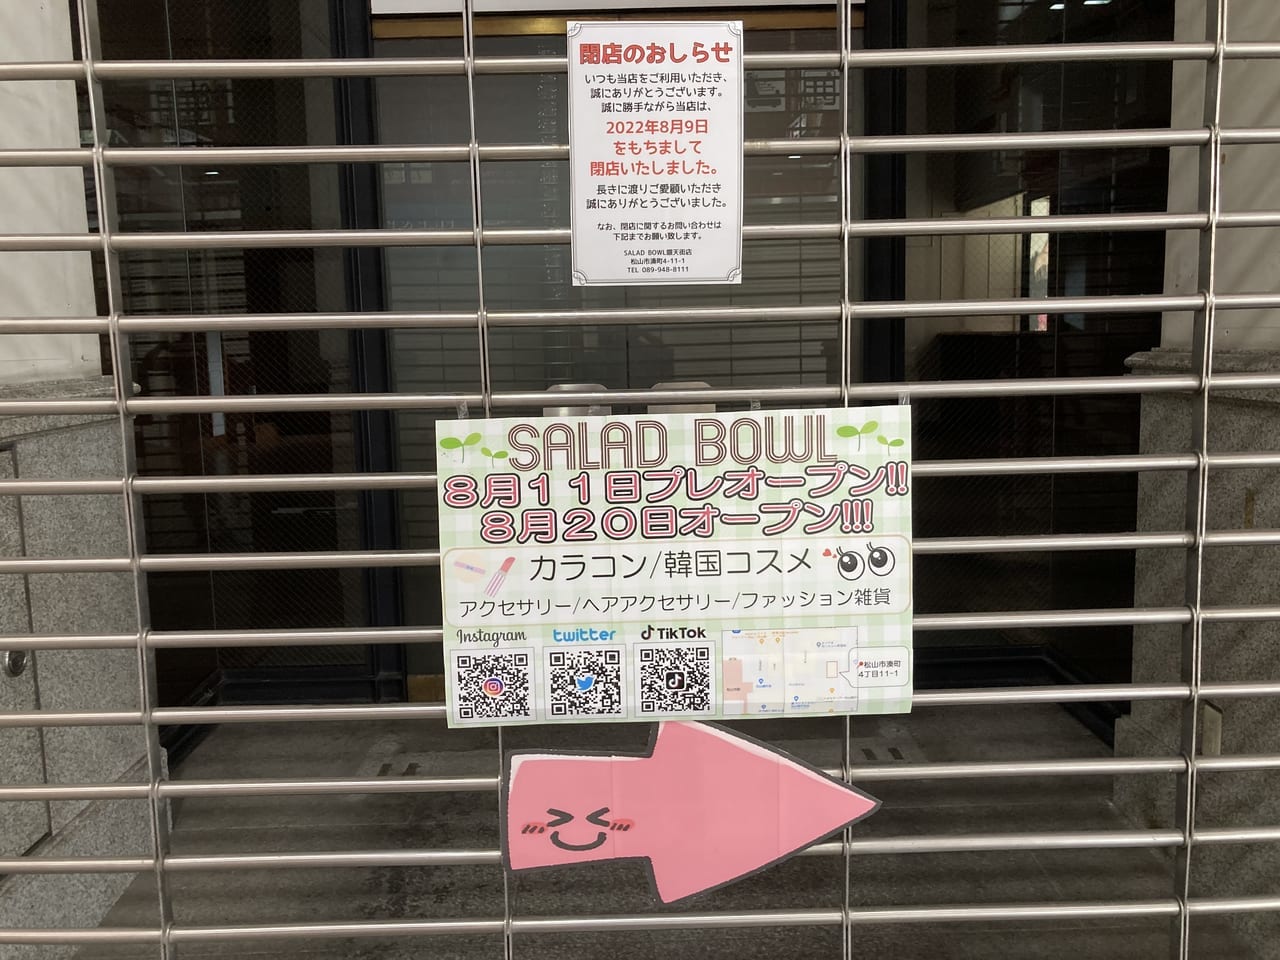 Salad bowl松山店